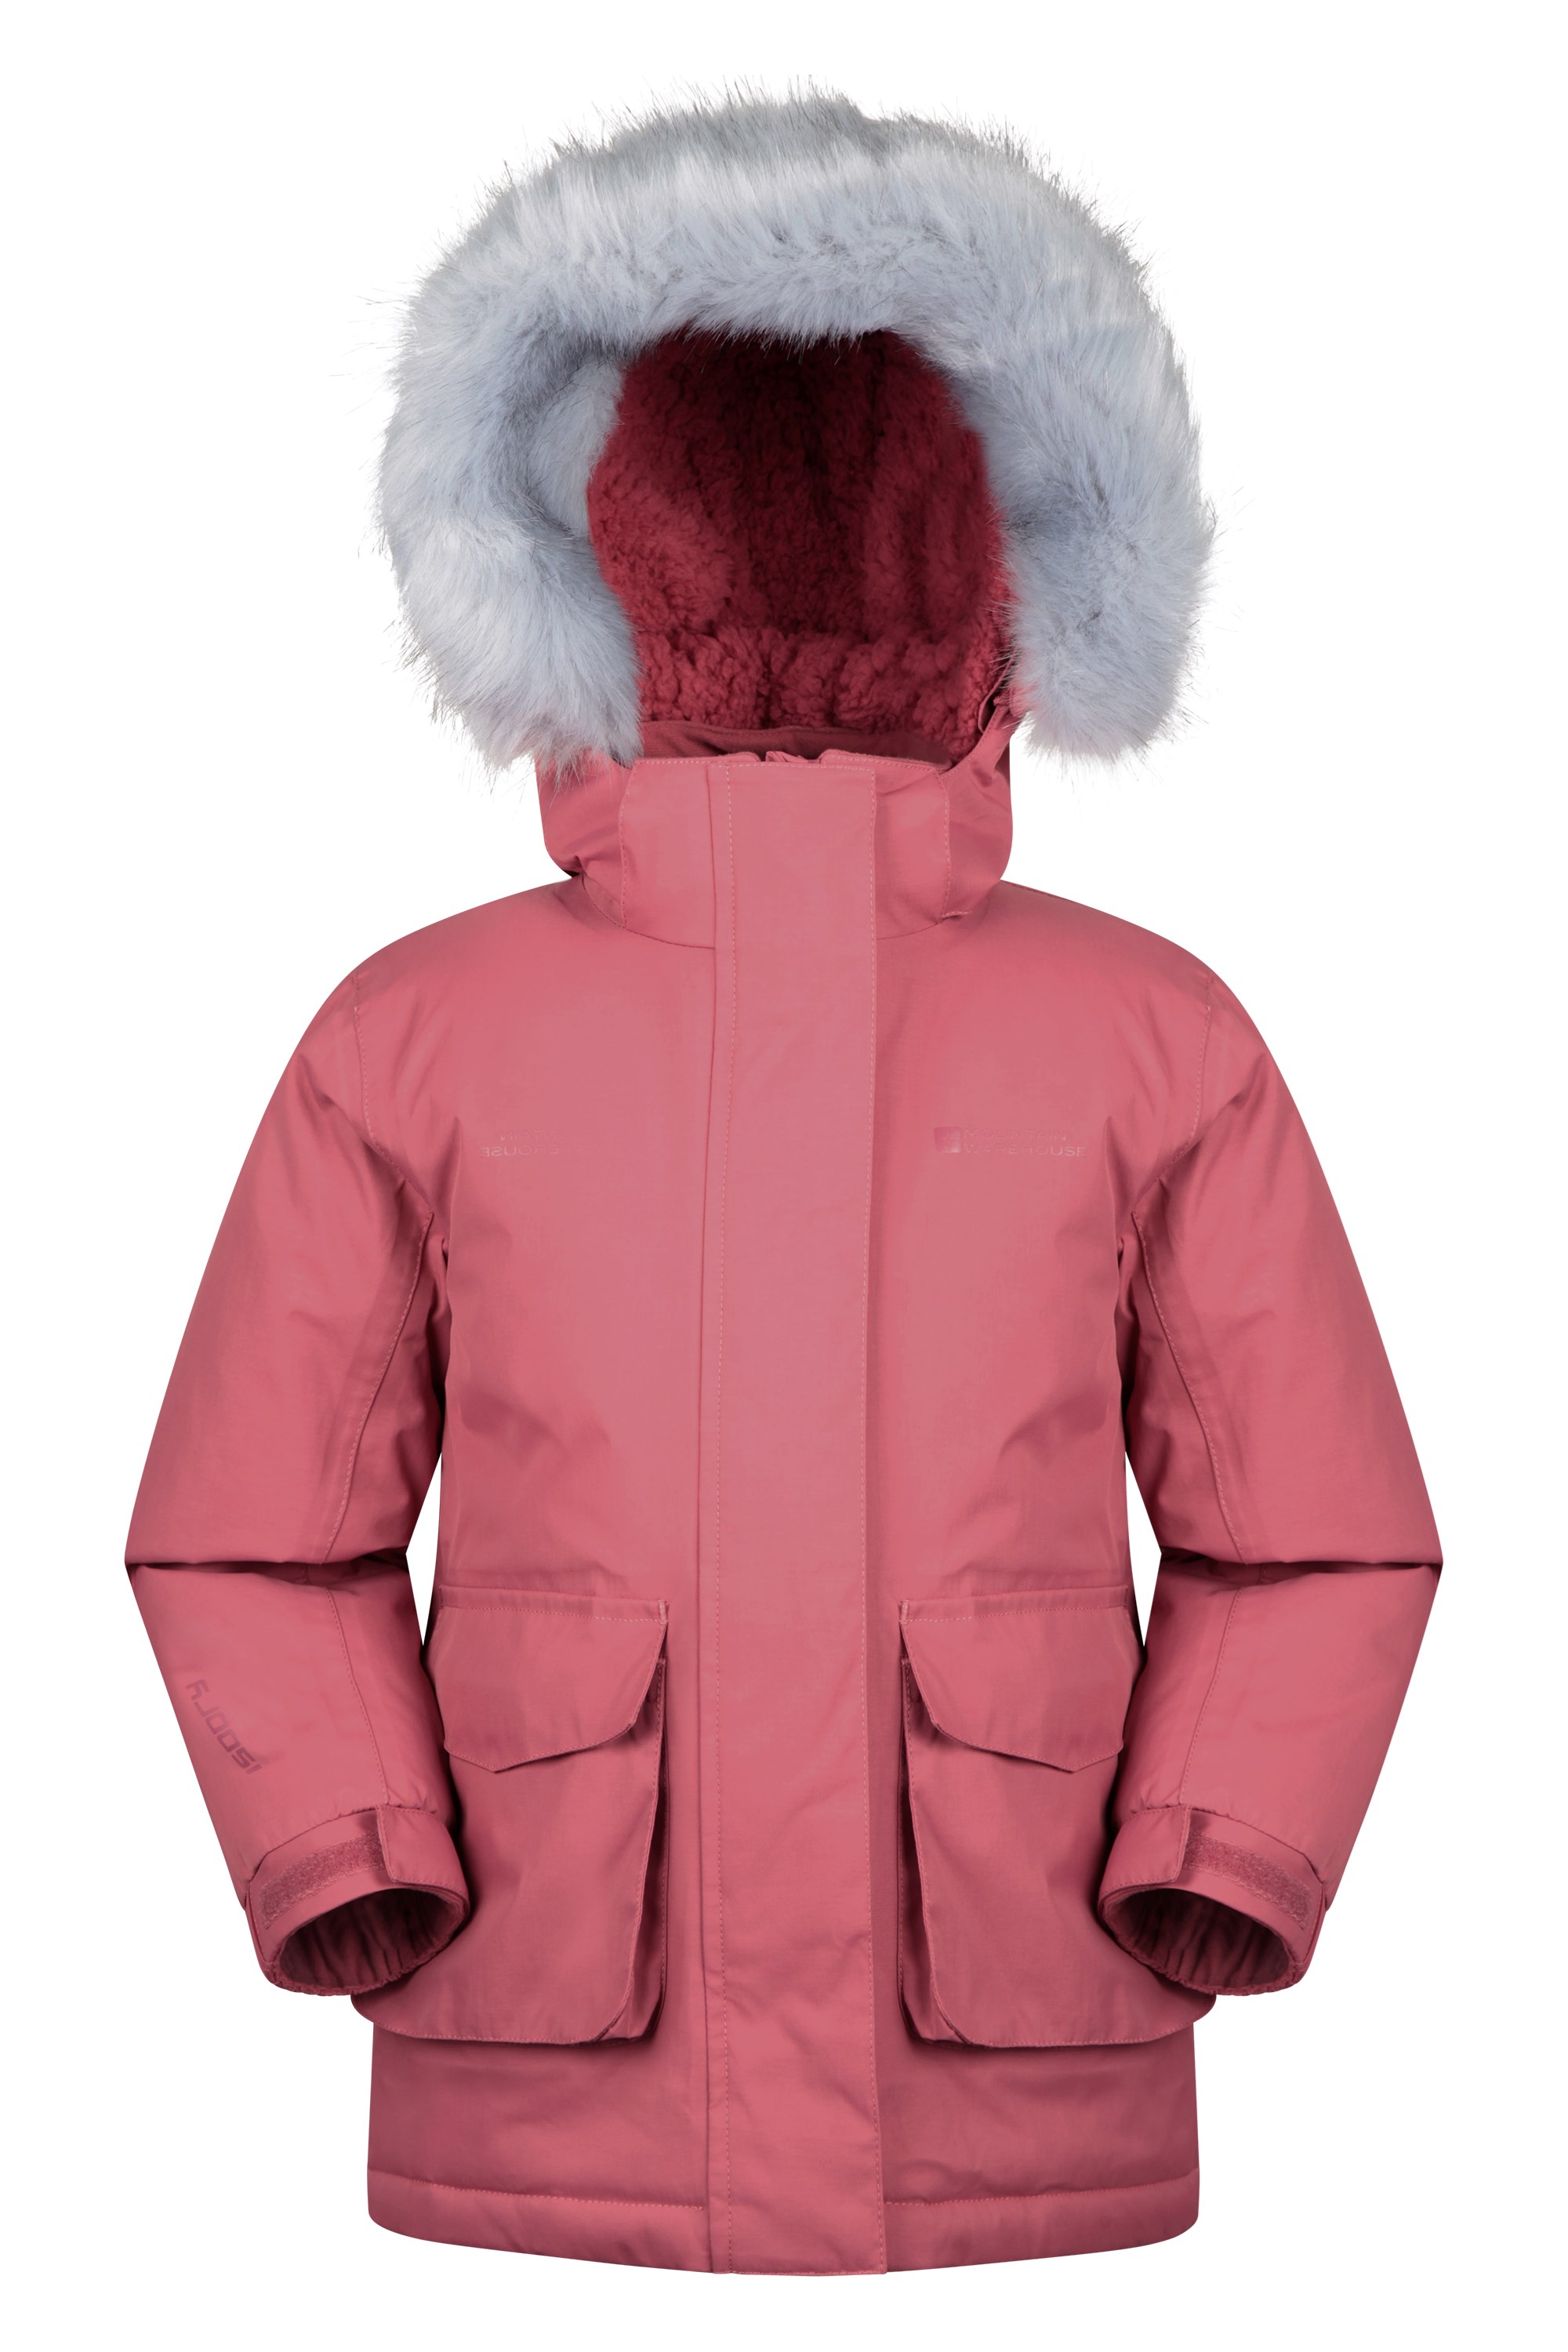 Ranger Plain Kids Water Resistant Jacket - Pink